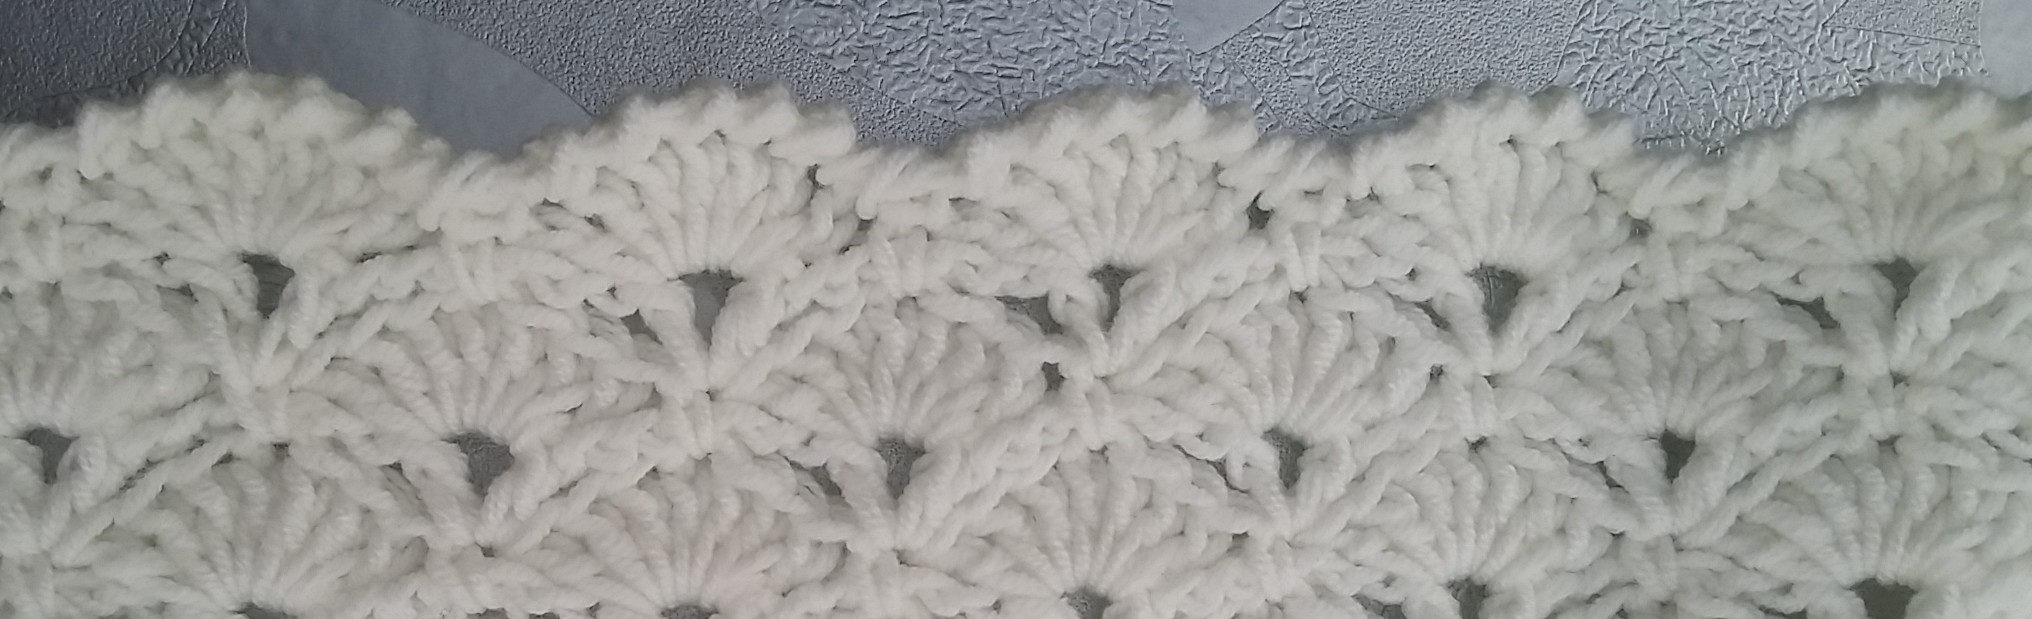 babyfilt baby blanket Crochet Square blanket pattern shell fan stitches